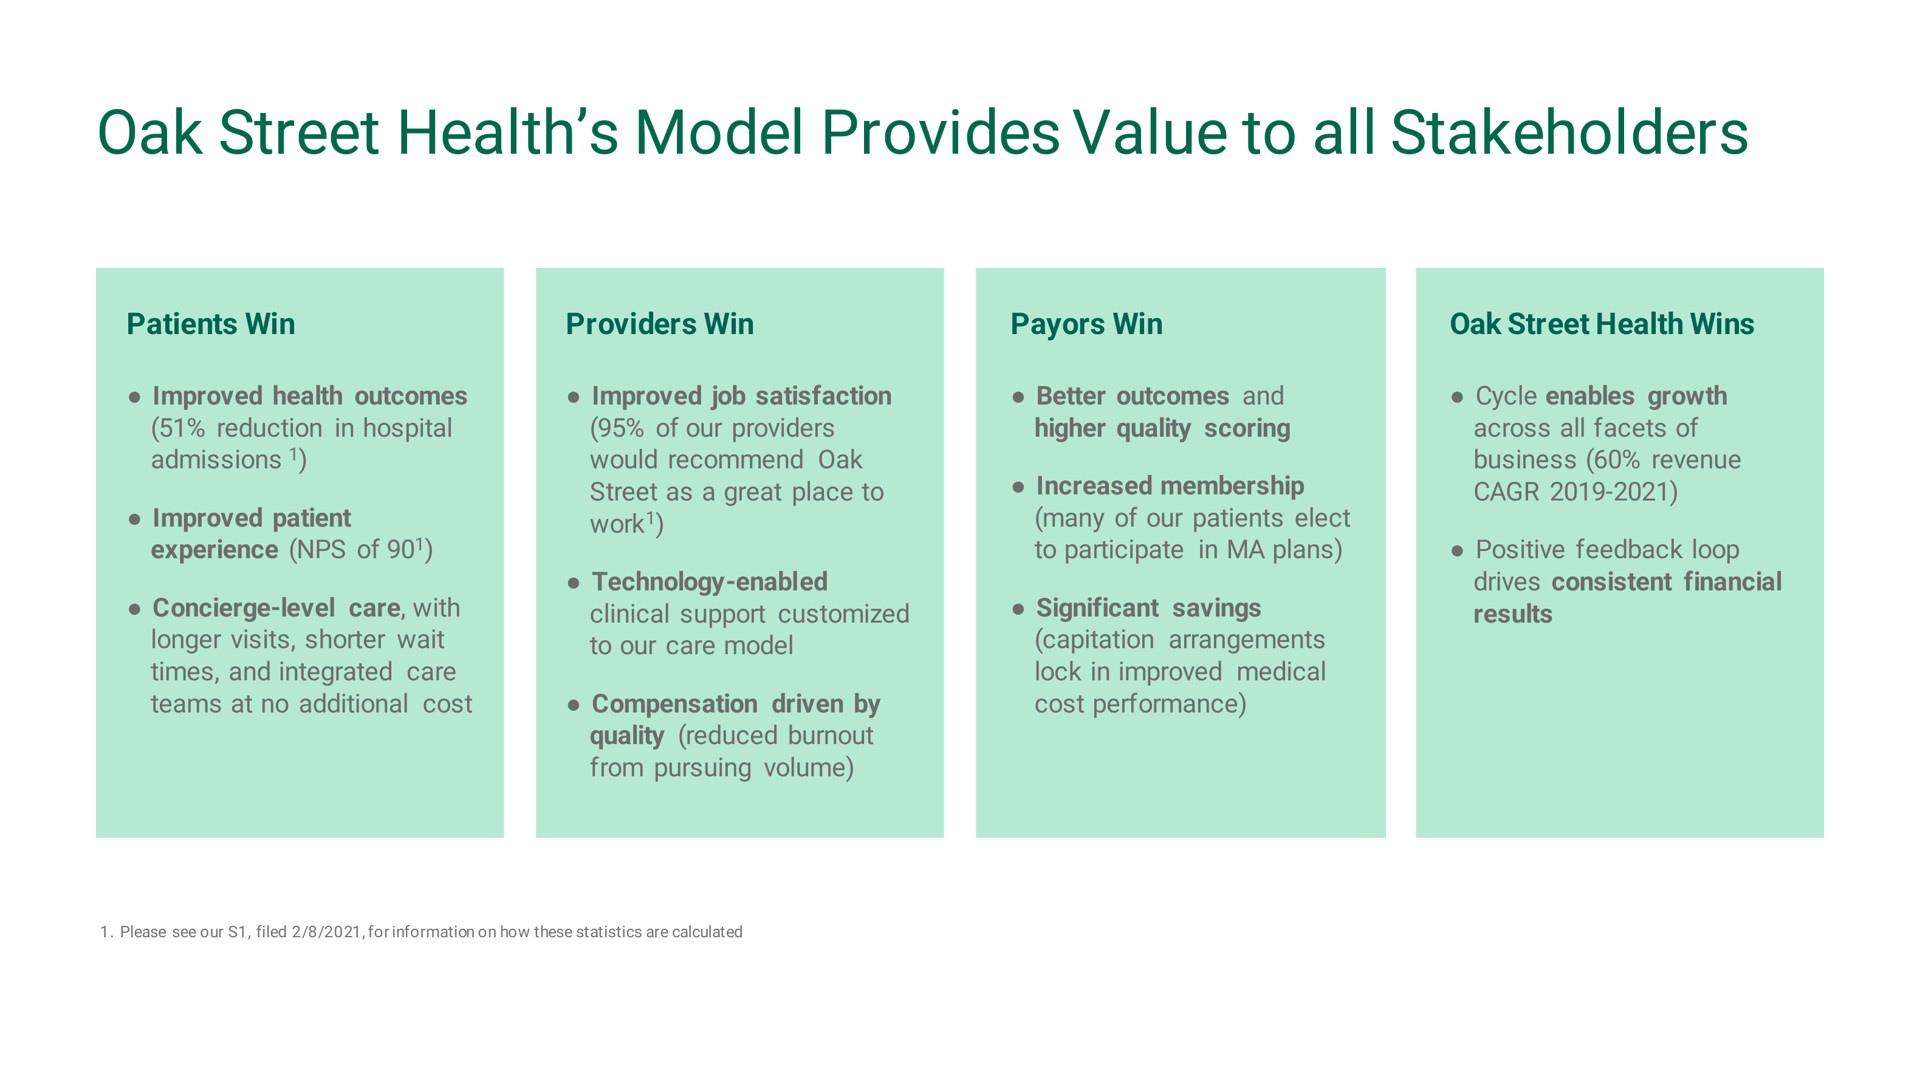 oak street health model provides value to all stakeholders | Oak Street Health